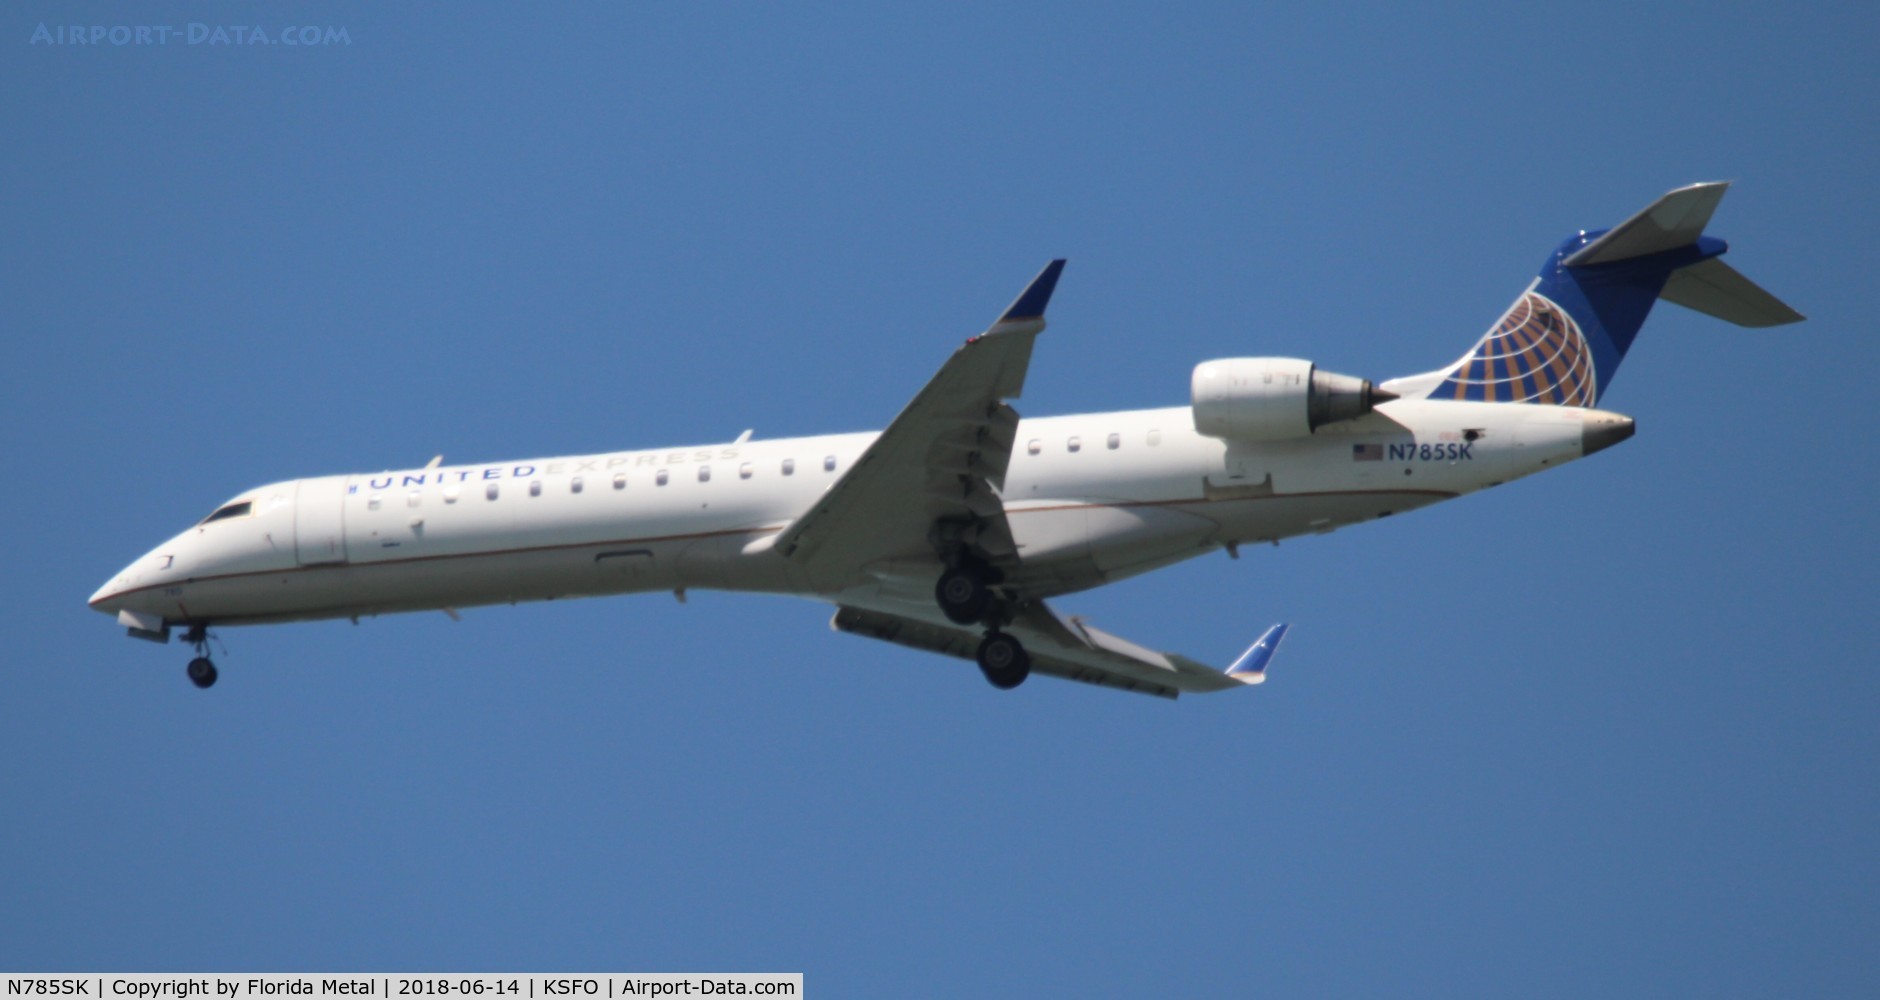 N785SK, 2009 Bombardier CRJ-700 (CL-600-2C10) Regional Jet C/N 10285, SFO spotting 2018